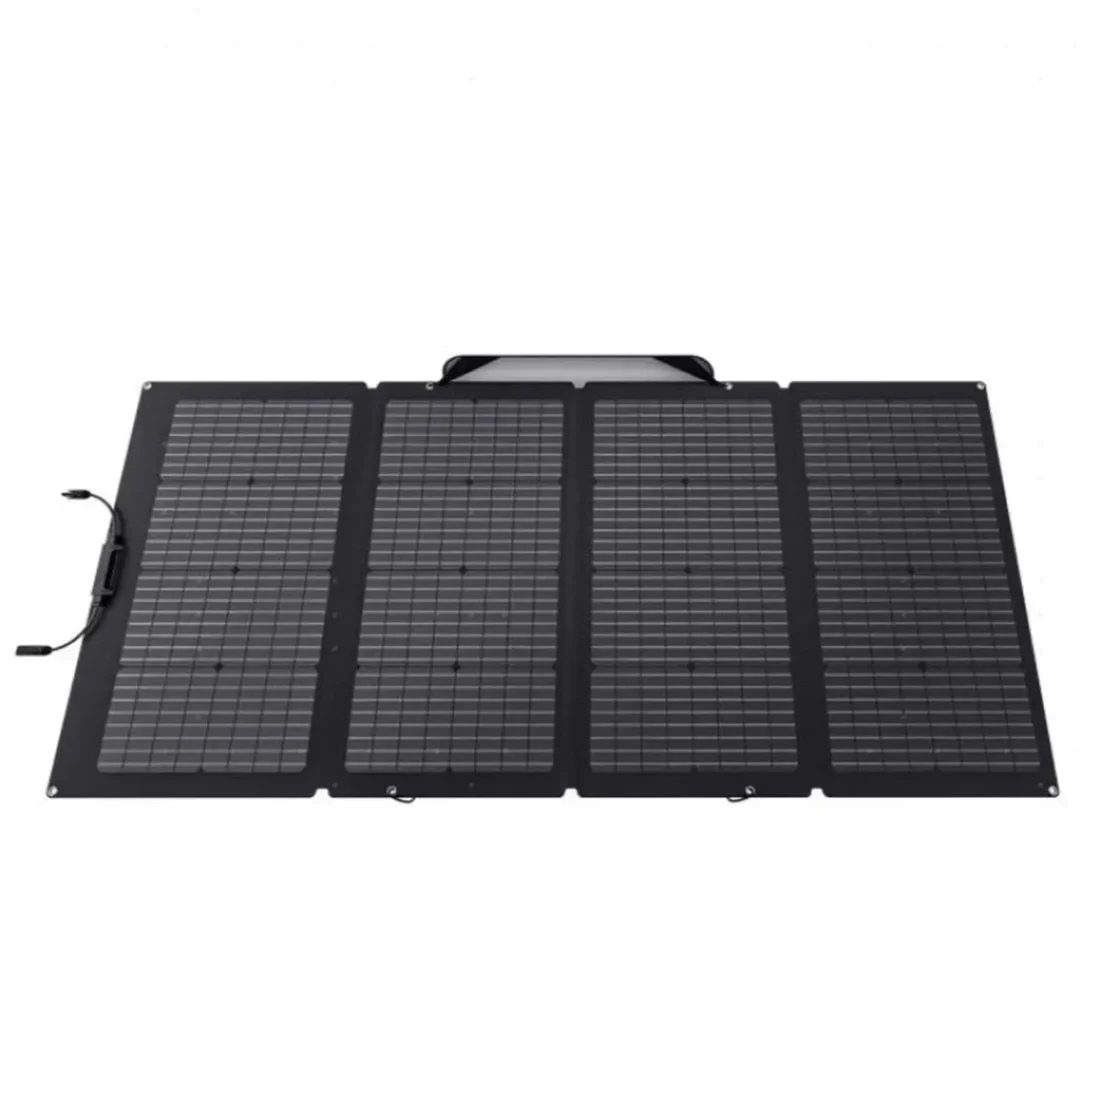 EcoFlow DELTA Pro + 3X 220W Solar Panel